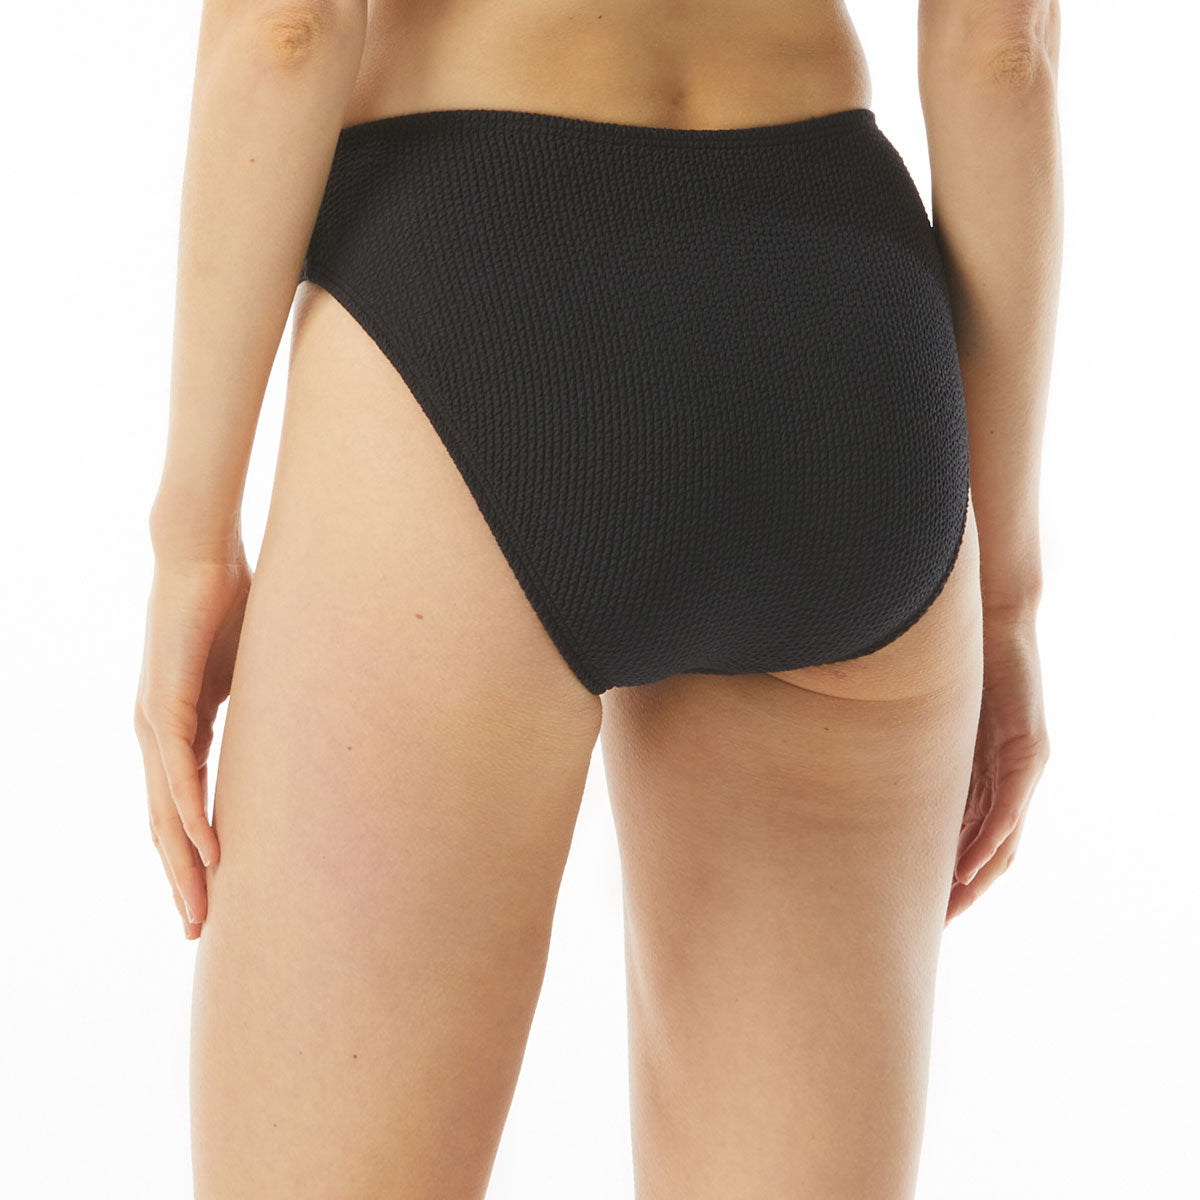 Michael Kors: Decadent Texture High Leg Bikini Bottom - BLACK